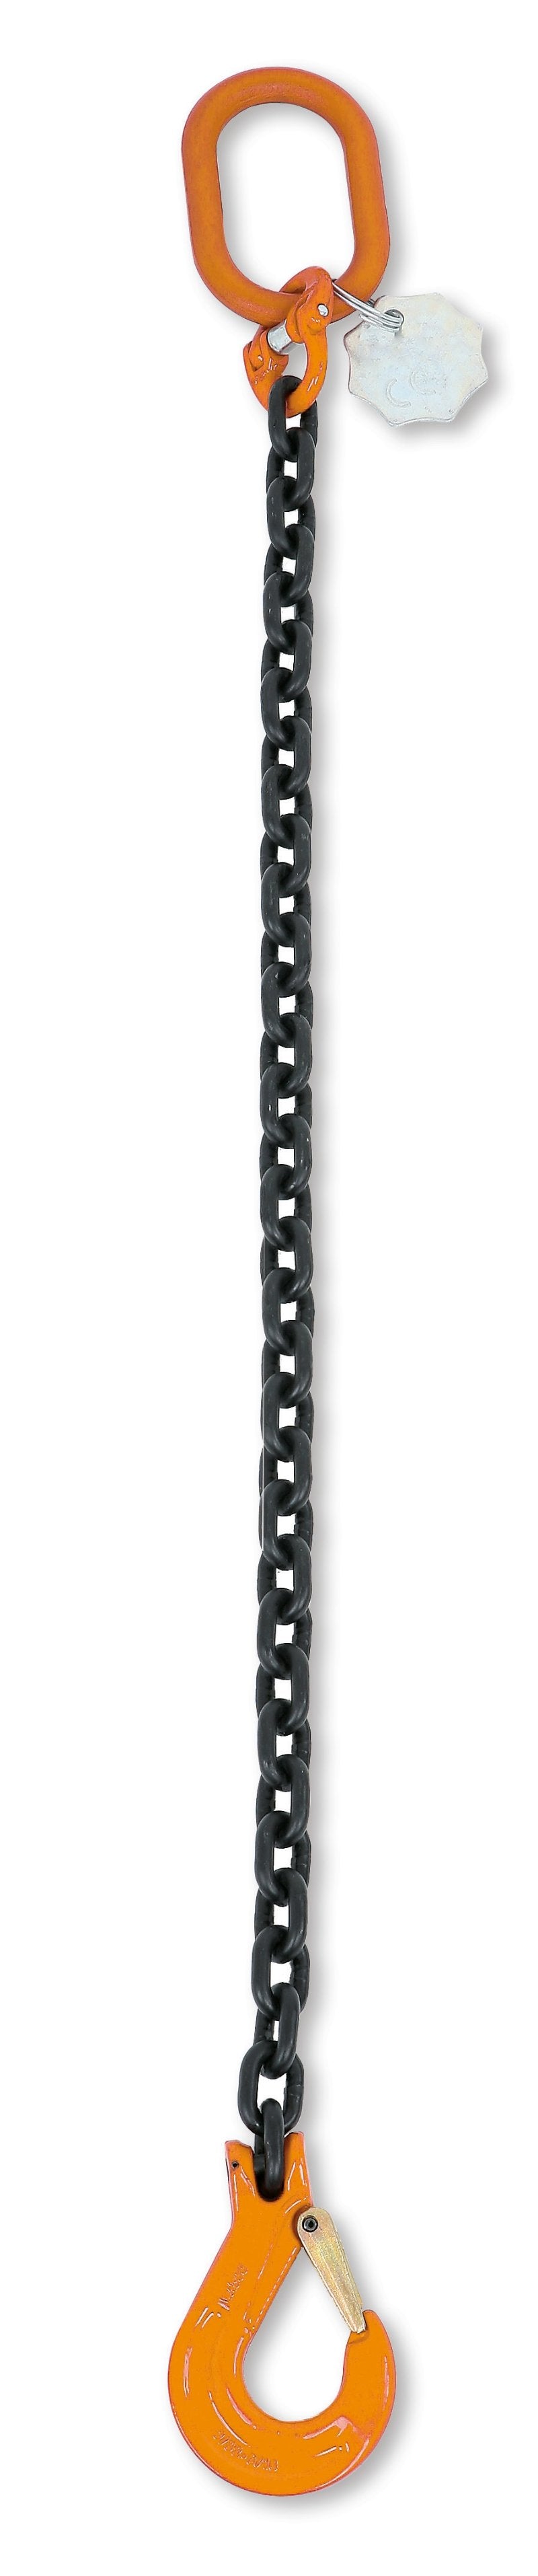 8091 - Lifting chain slings, 1 leg grade 8